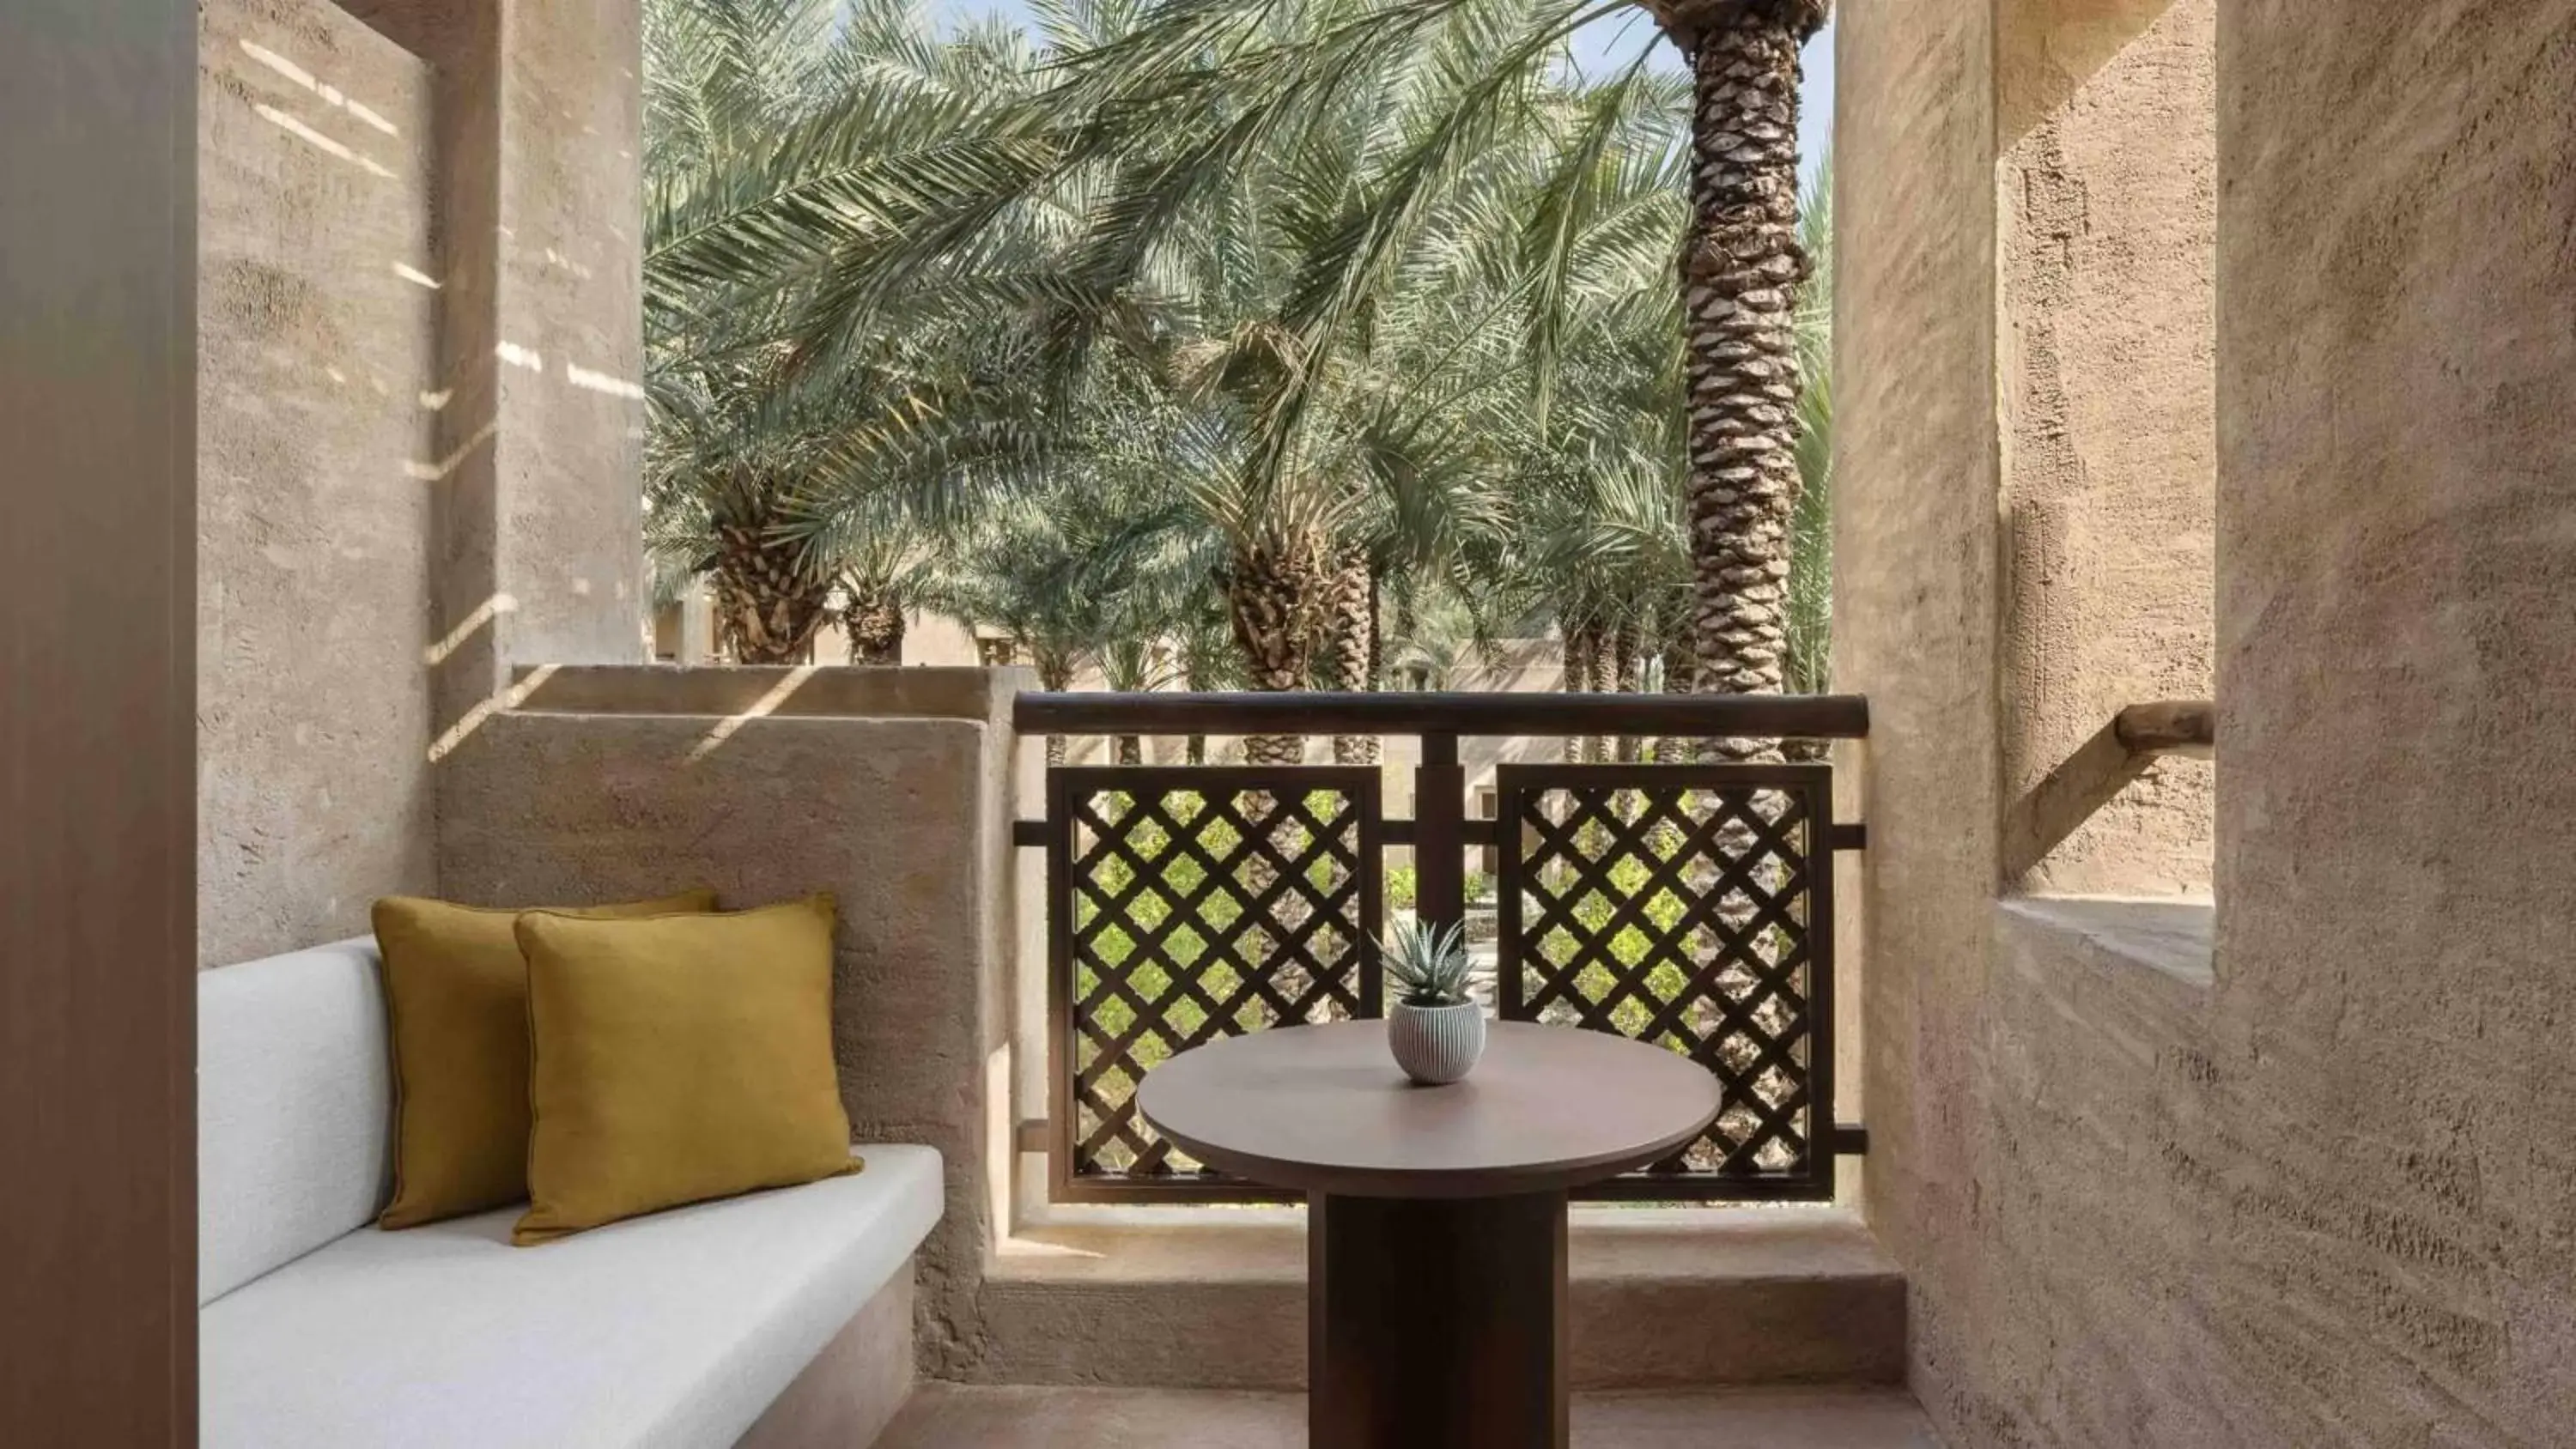 Balcony/Terrace, Seating Area in Bab Al Shams, A Rare Finds Desert Resort, Dubai